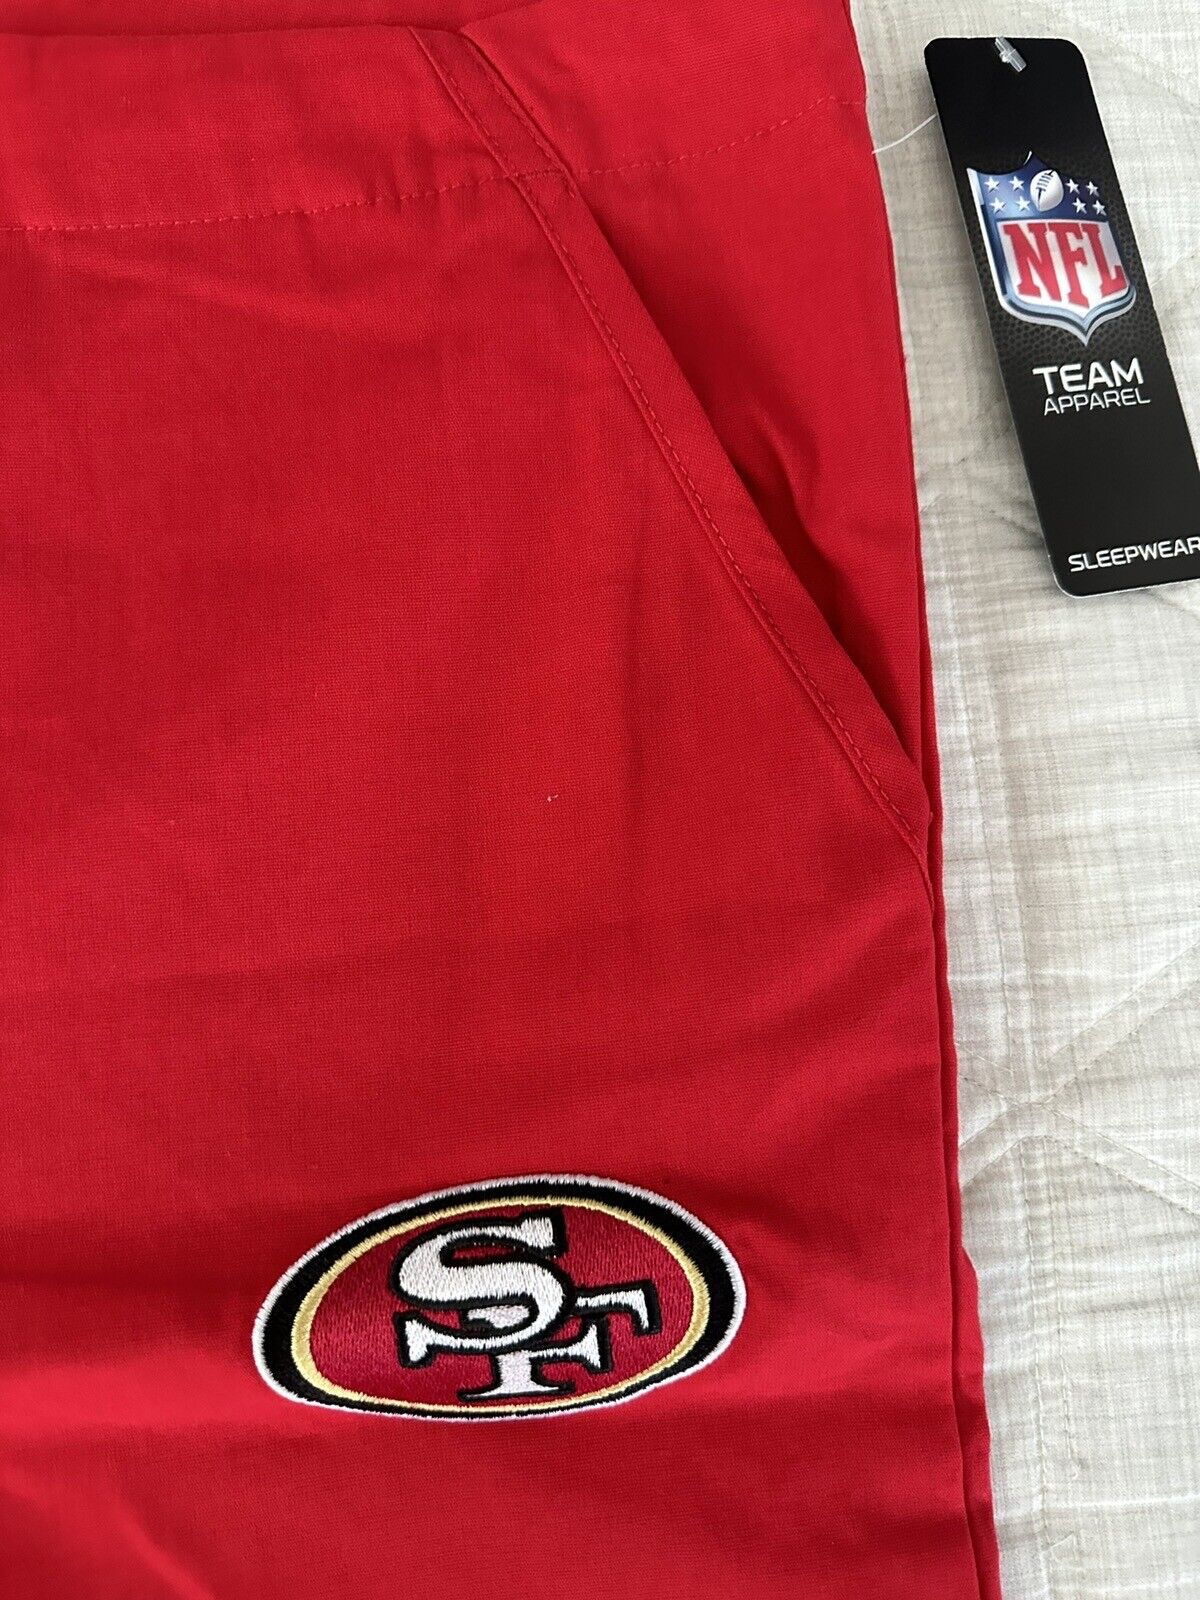 NFL Team Apparel SF 49ers Football Sleepwear Loungewear Pants Sz M NWT ...